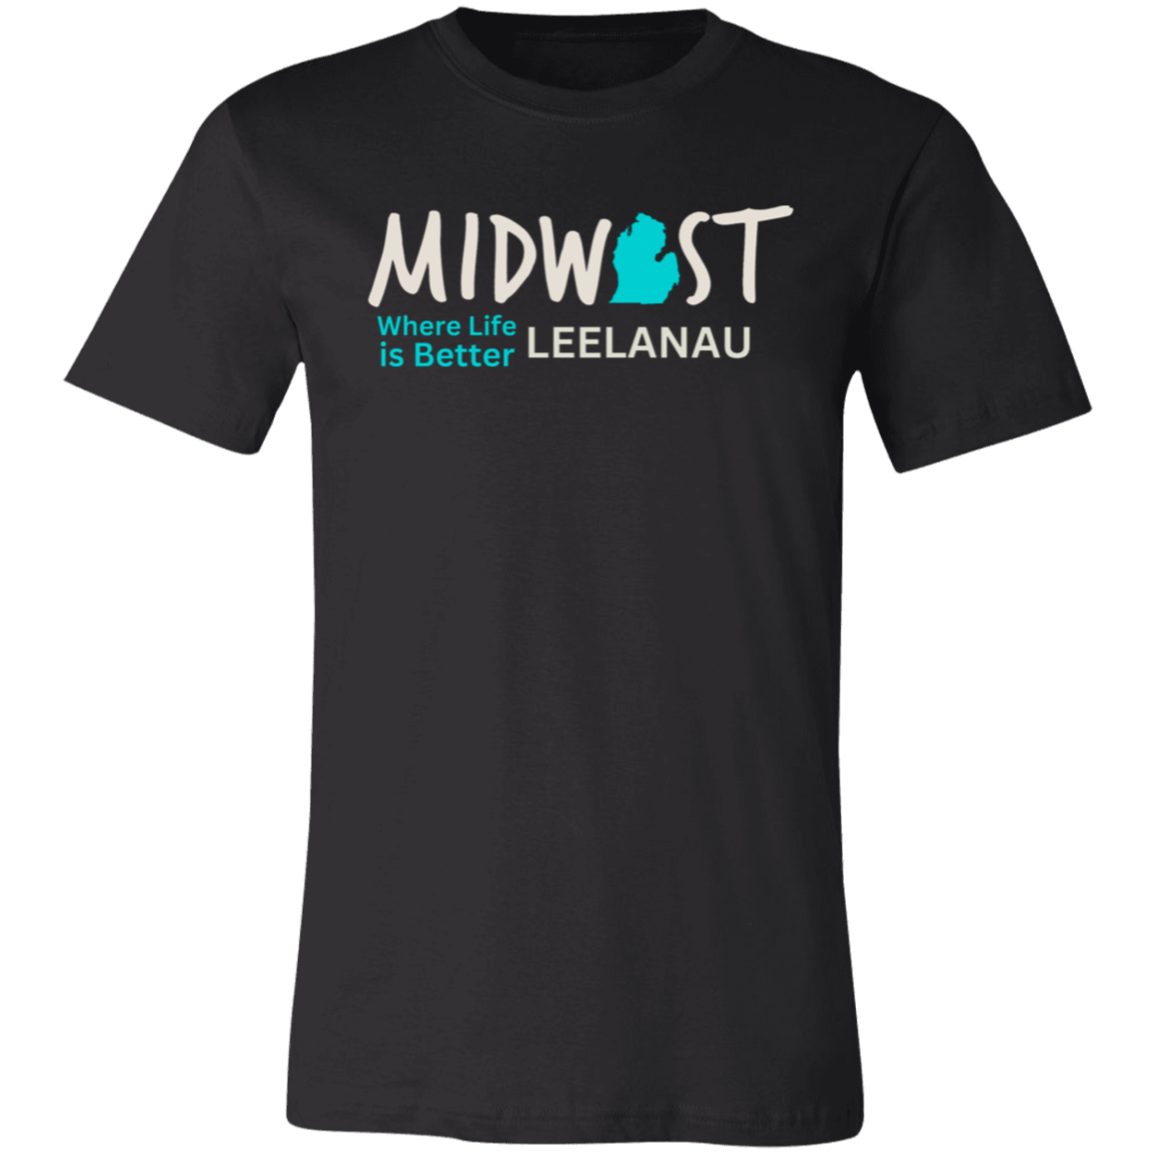 Midwest Where Life is Better Leelanau Unisex Jersey Tee